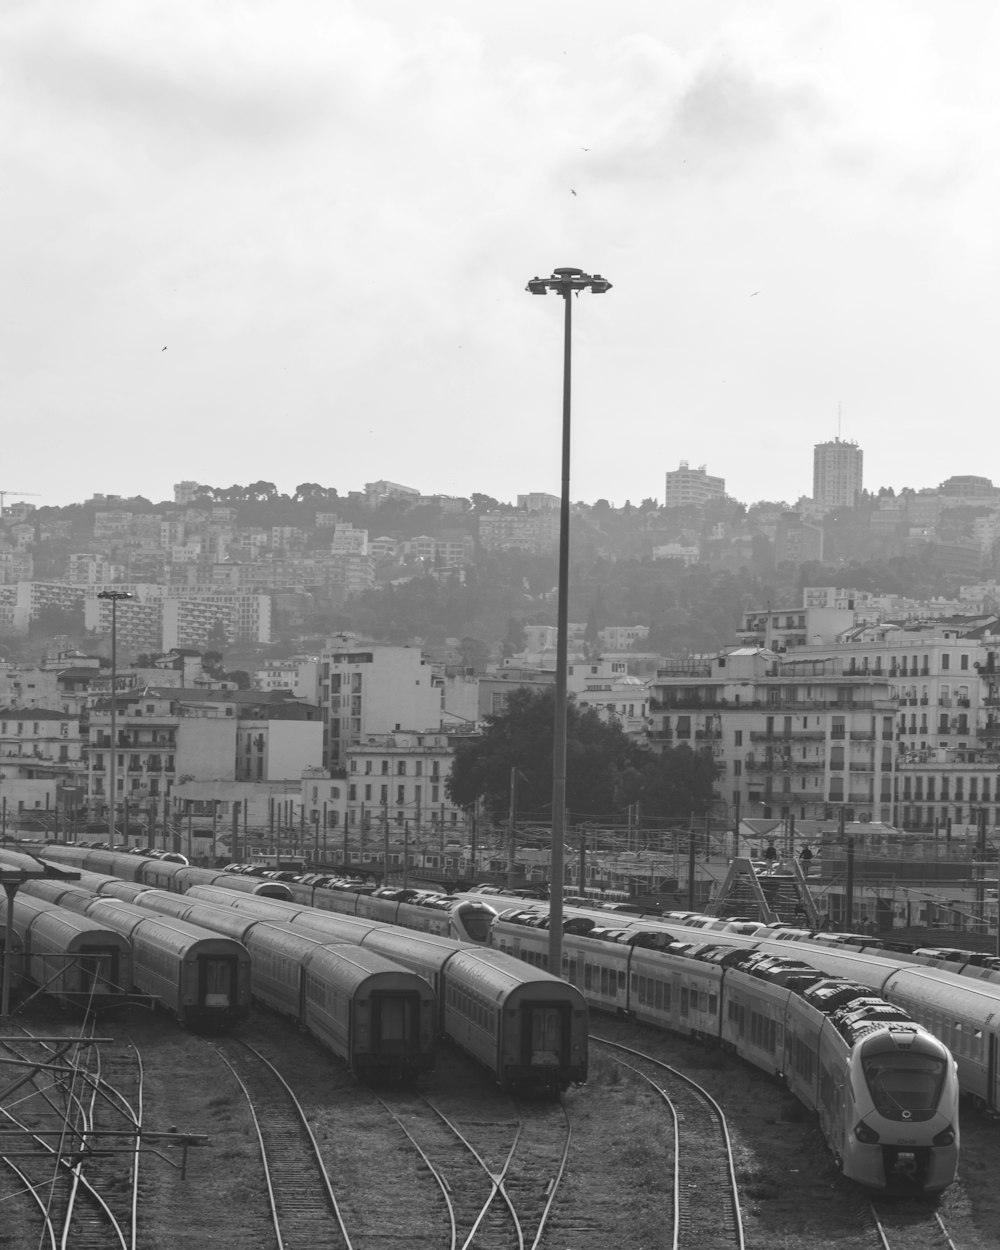 a black and white photo of a train yard